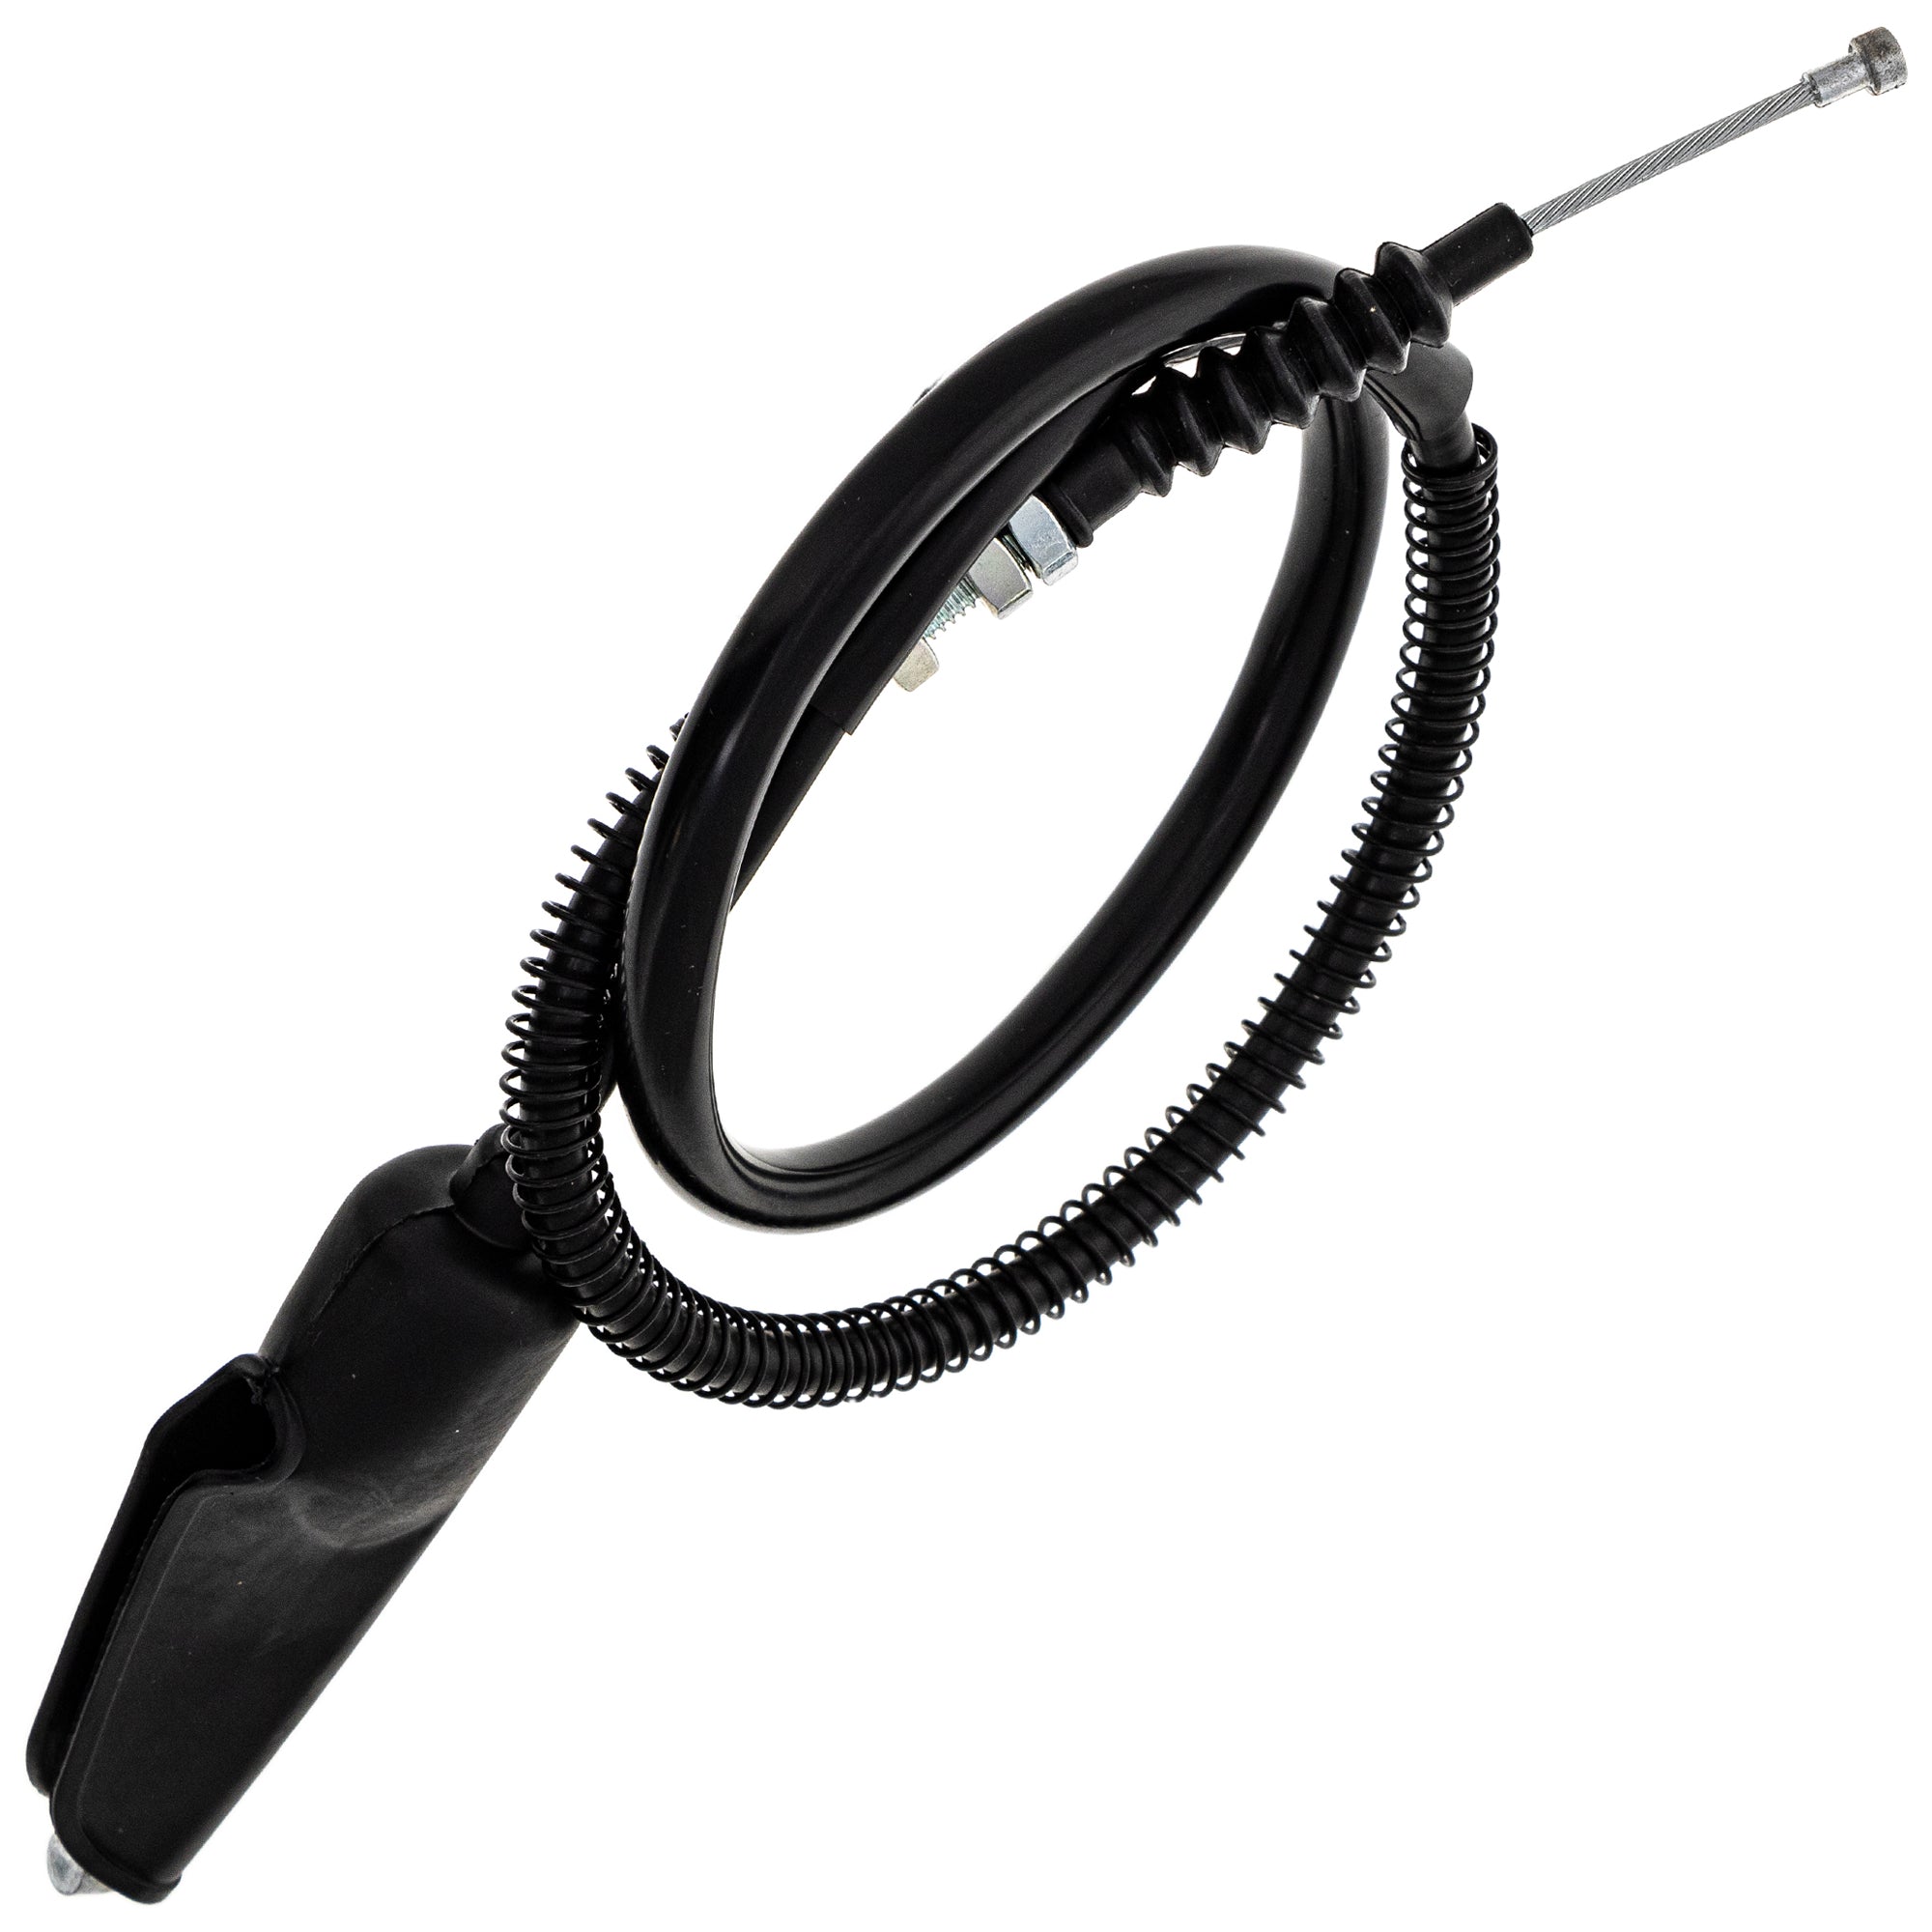 Clutch Cable for Yamaha BW200 TW200 XT225 1RL-26335-00-00